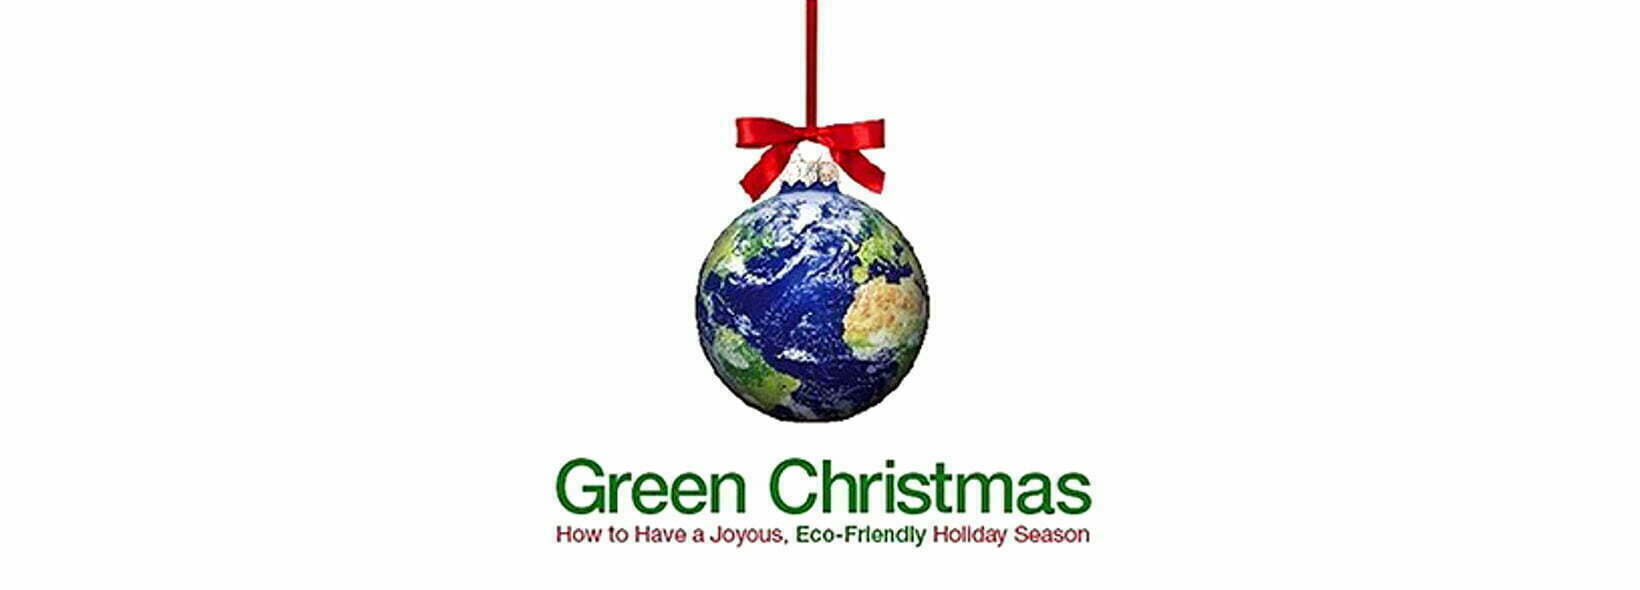 Green Christmas – how to have a joyous, eco-friendly holiday season